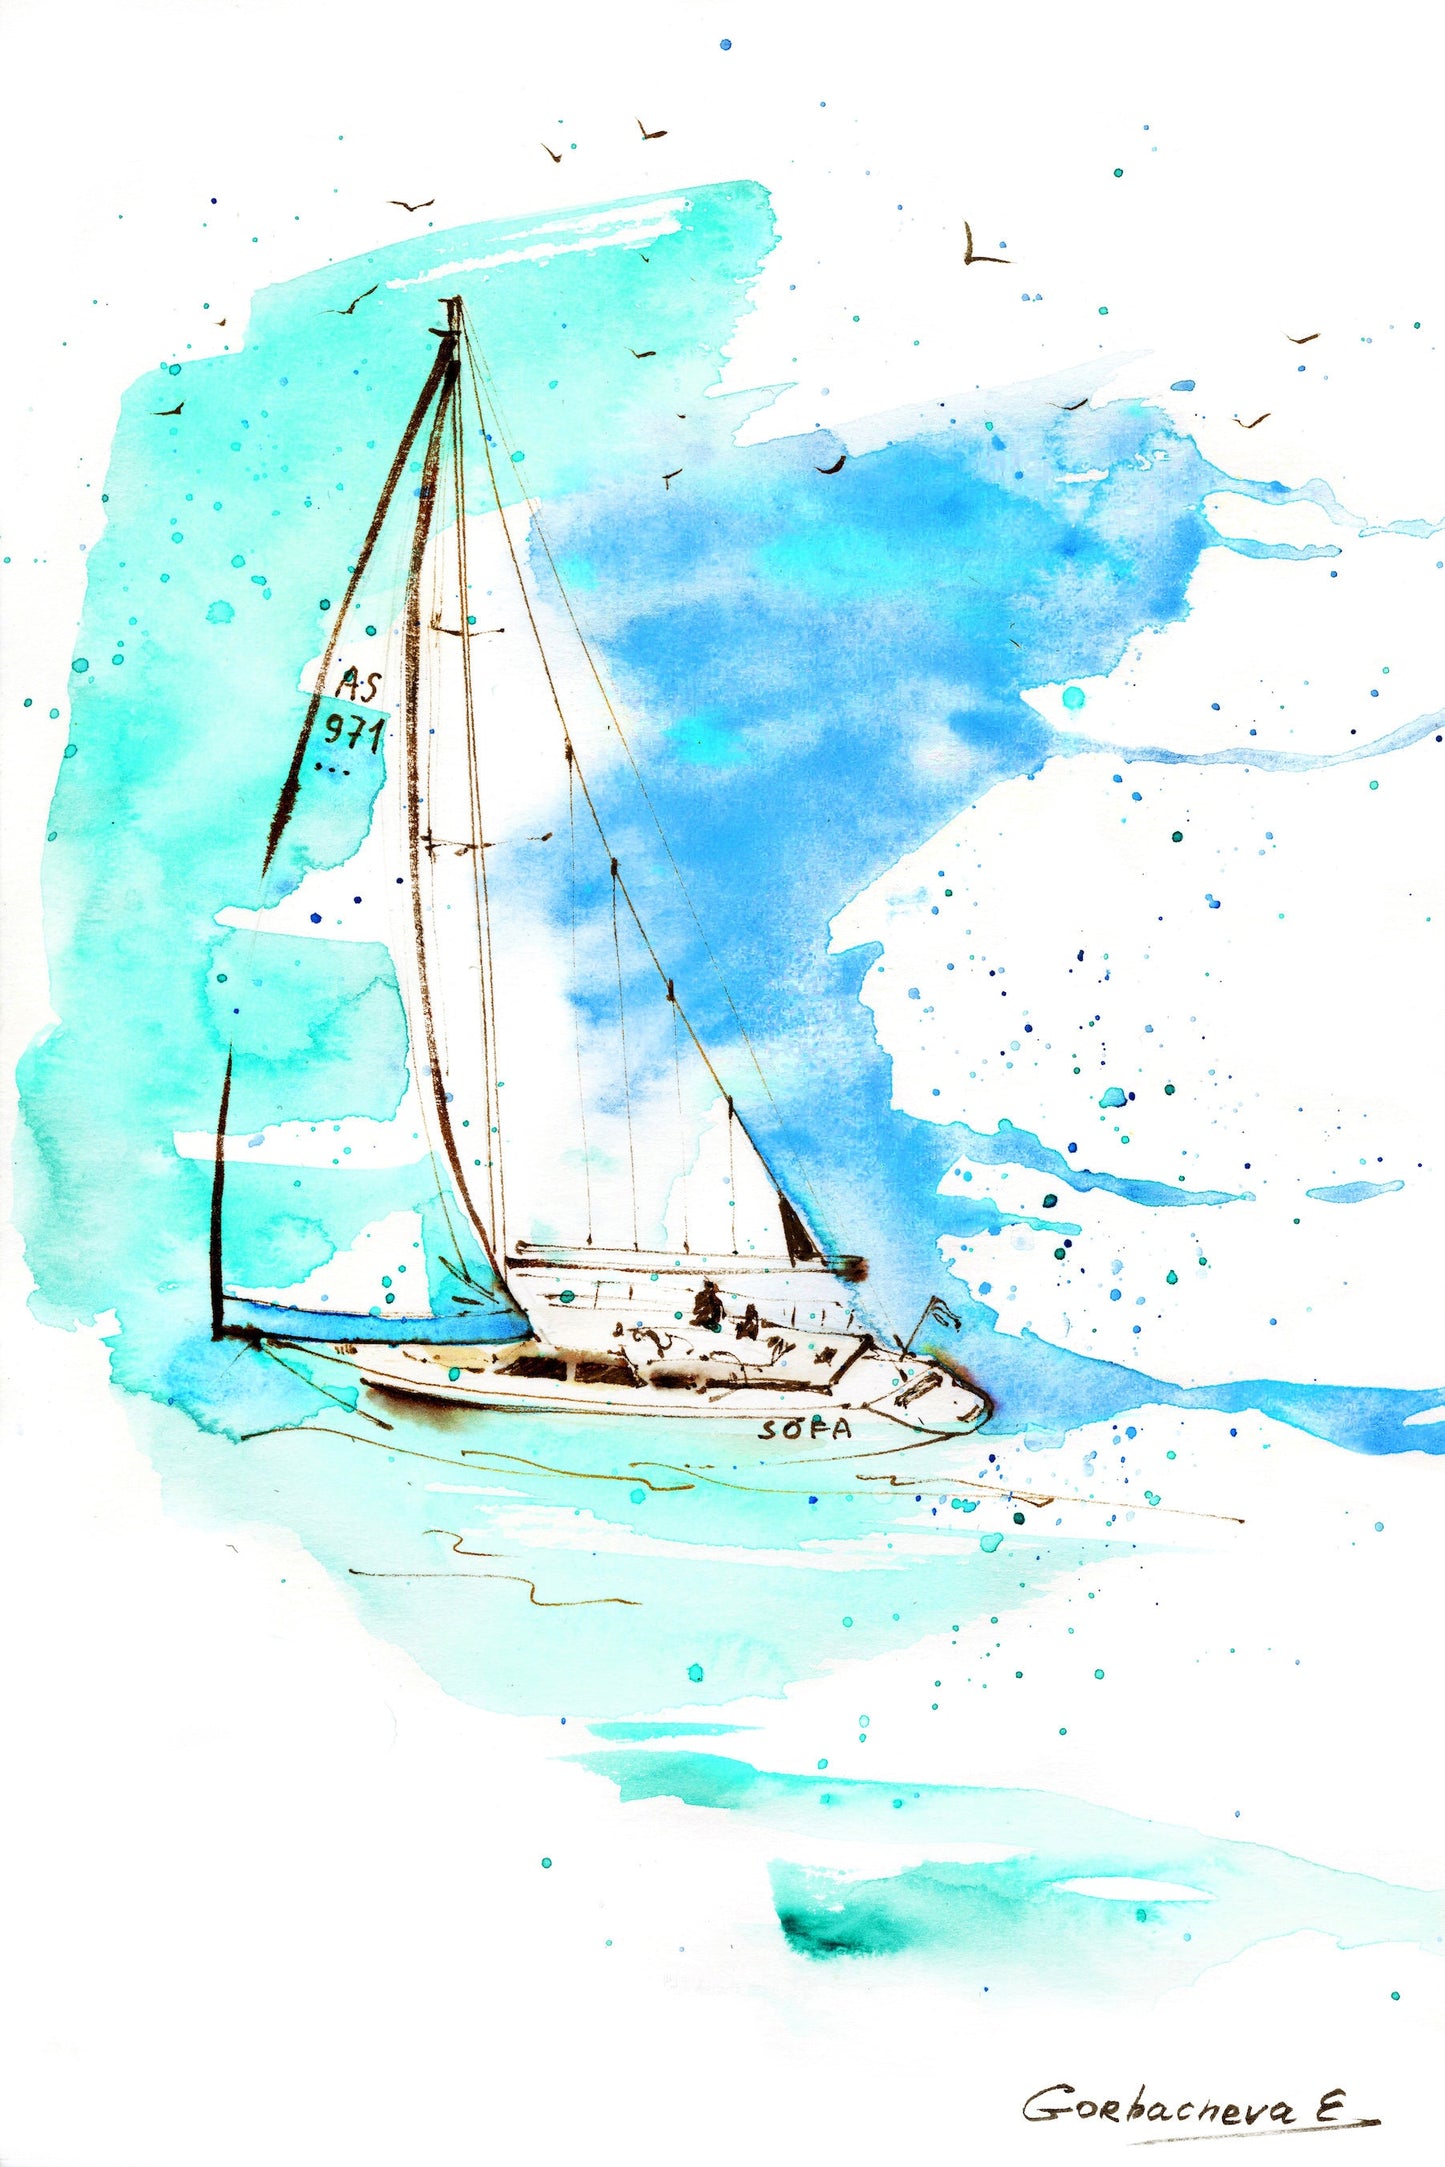 Yachting Gallery Wall Set of 4 Piece, Sailboats Wall Decor, Nautical Art, Blue Green Yacht Prints, Watercolor Sea Sketch